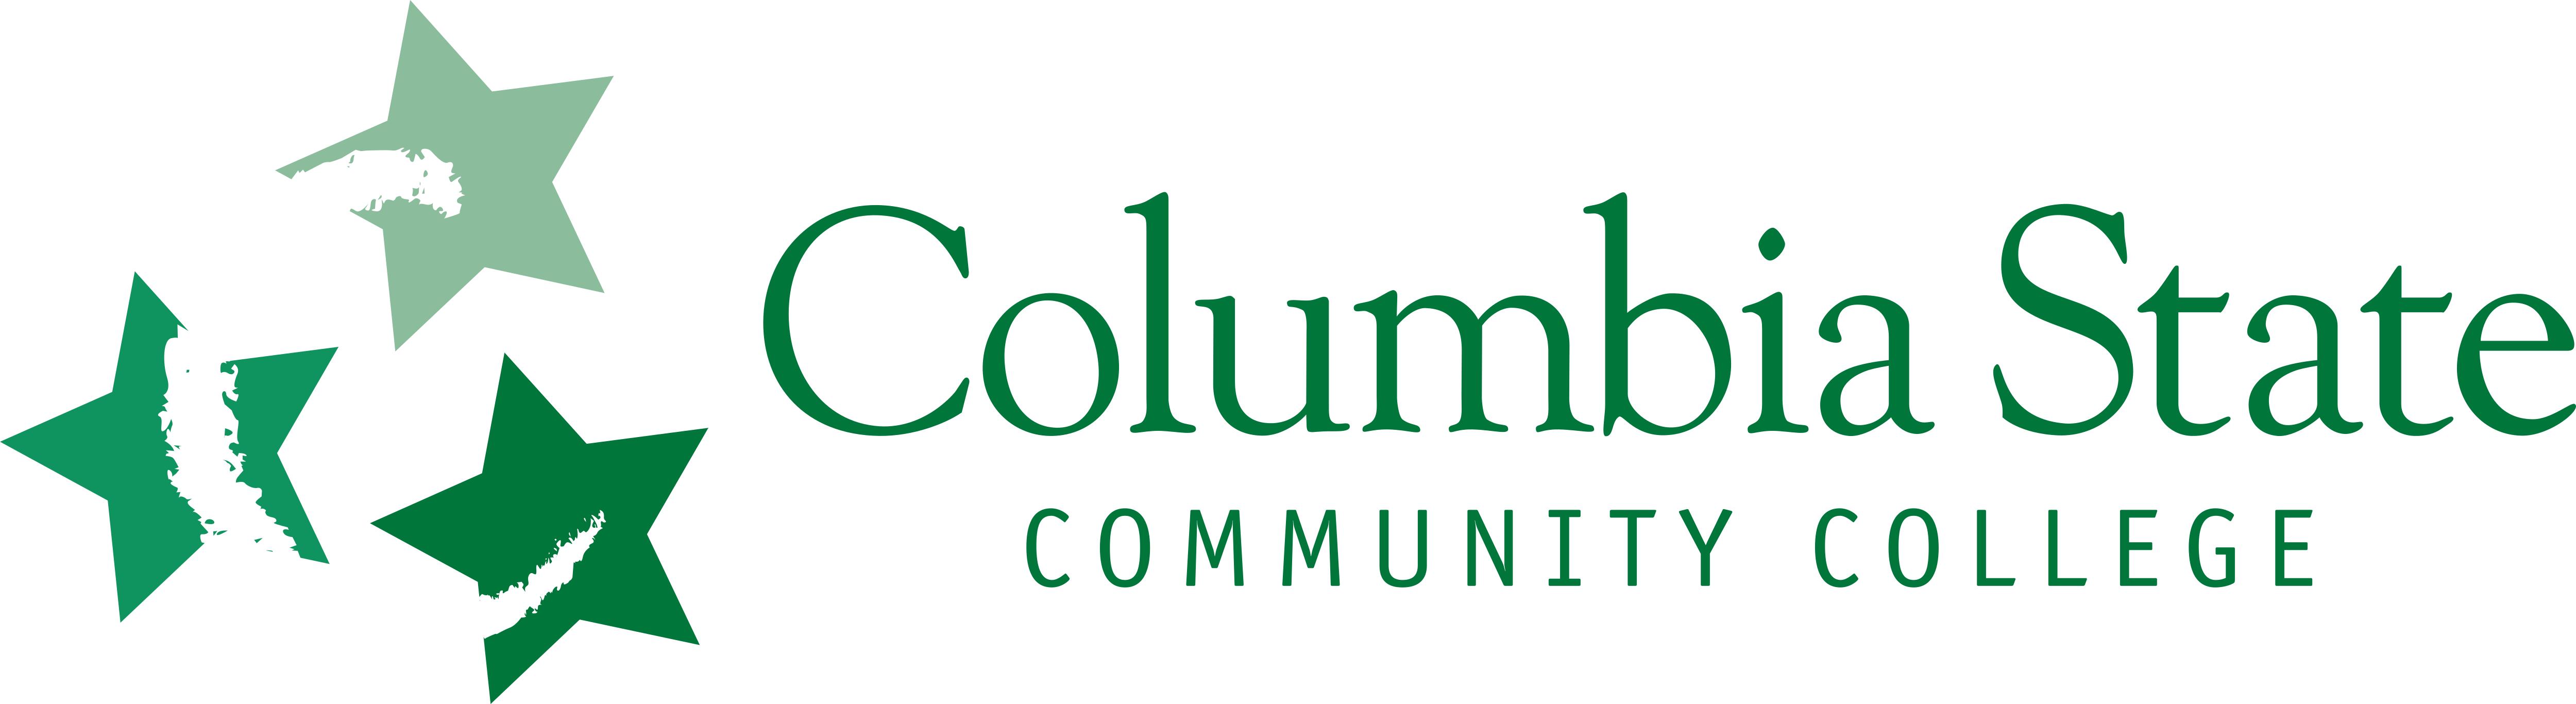 Columbia logo арт. Коламбия лого вектор. Логотип коламбия ресо. Columbia state